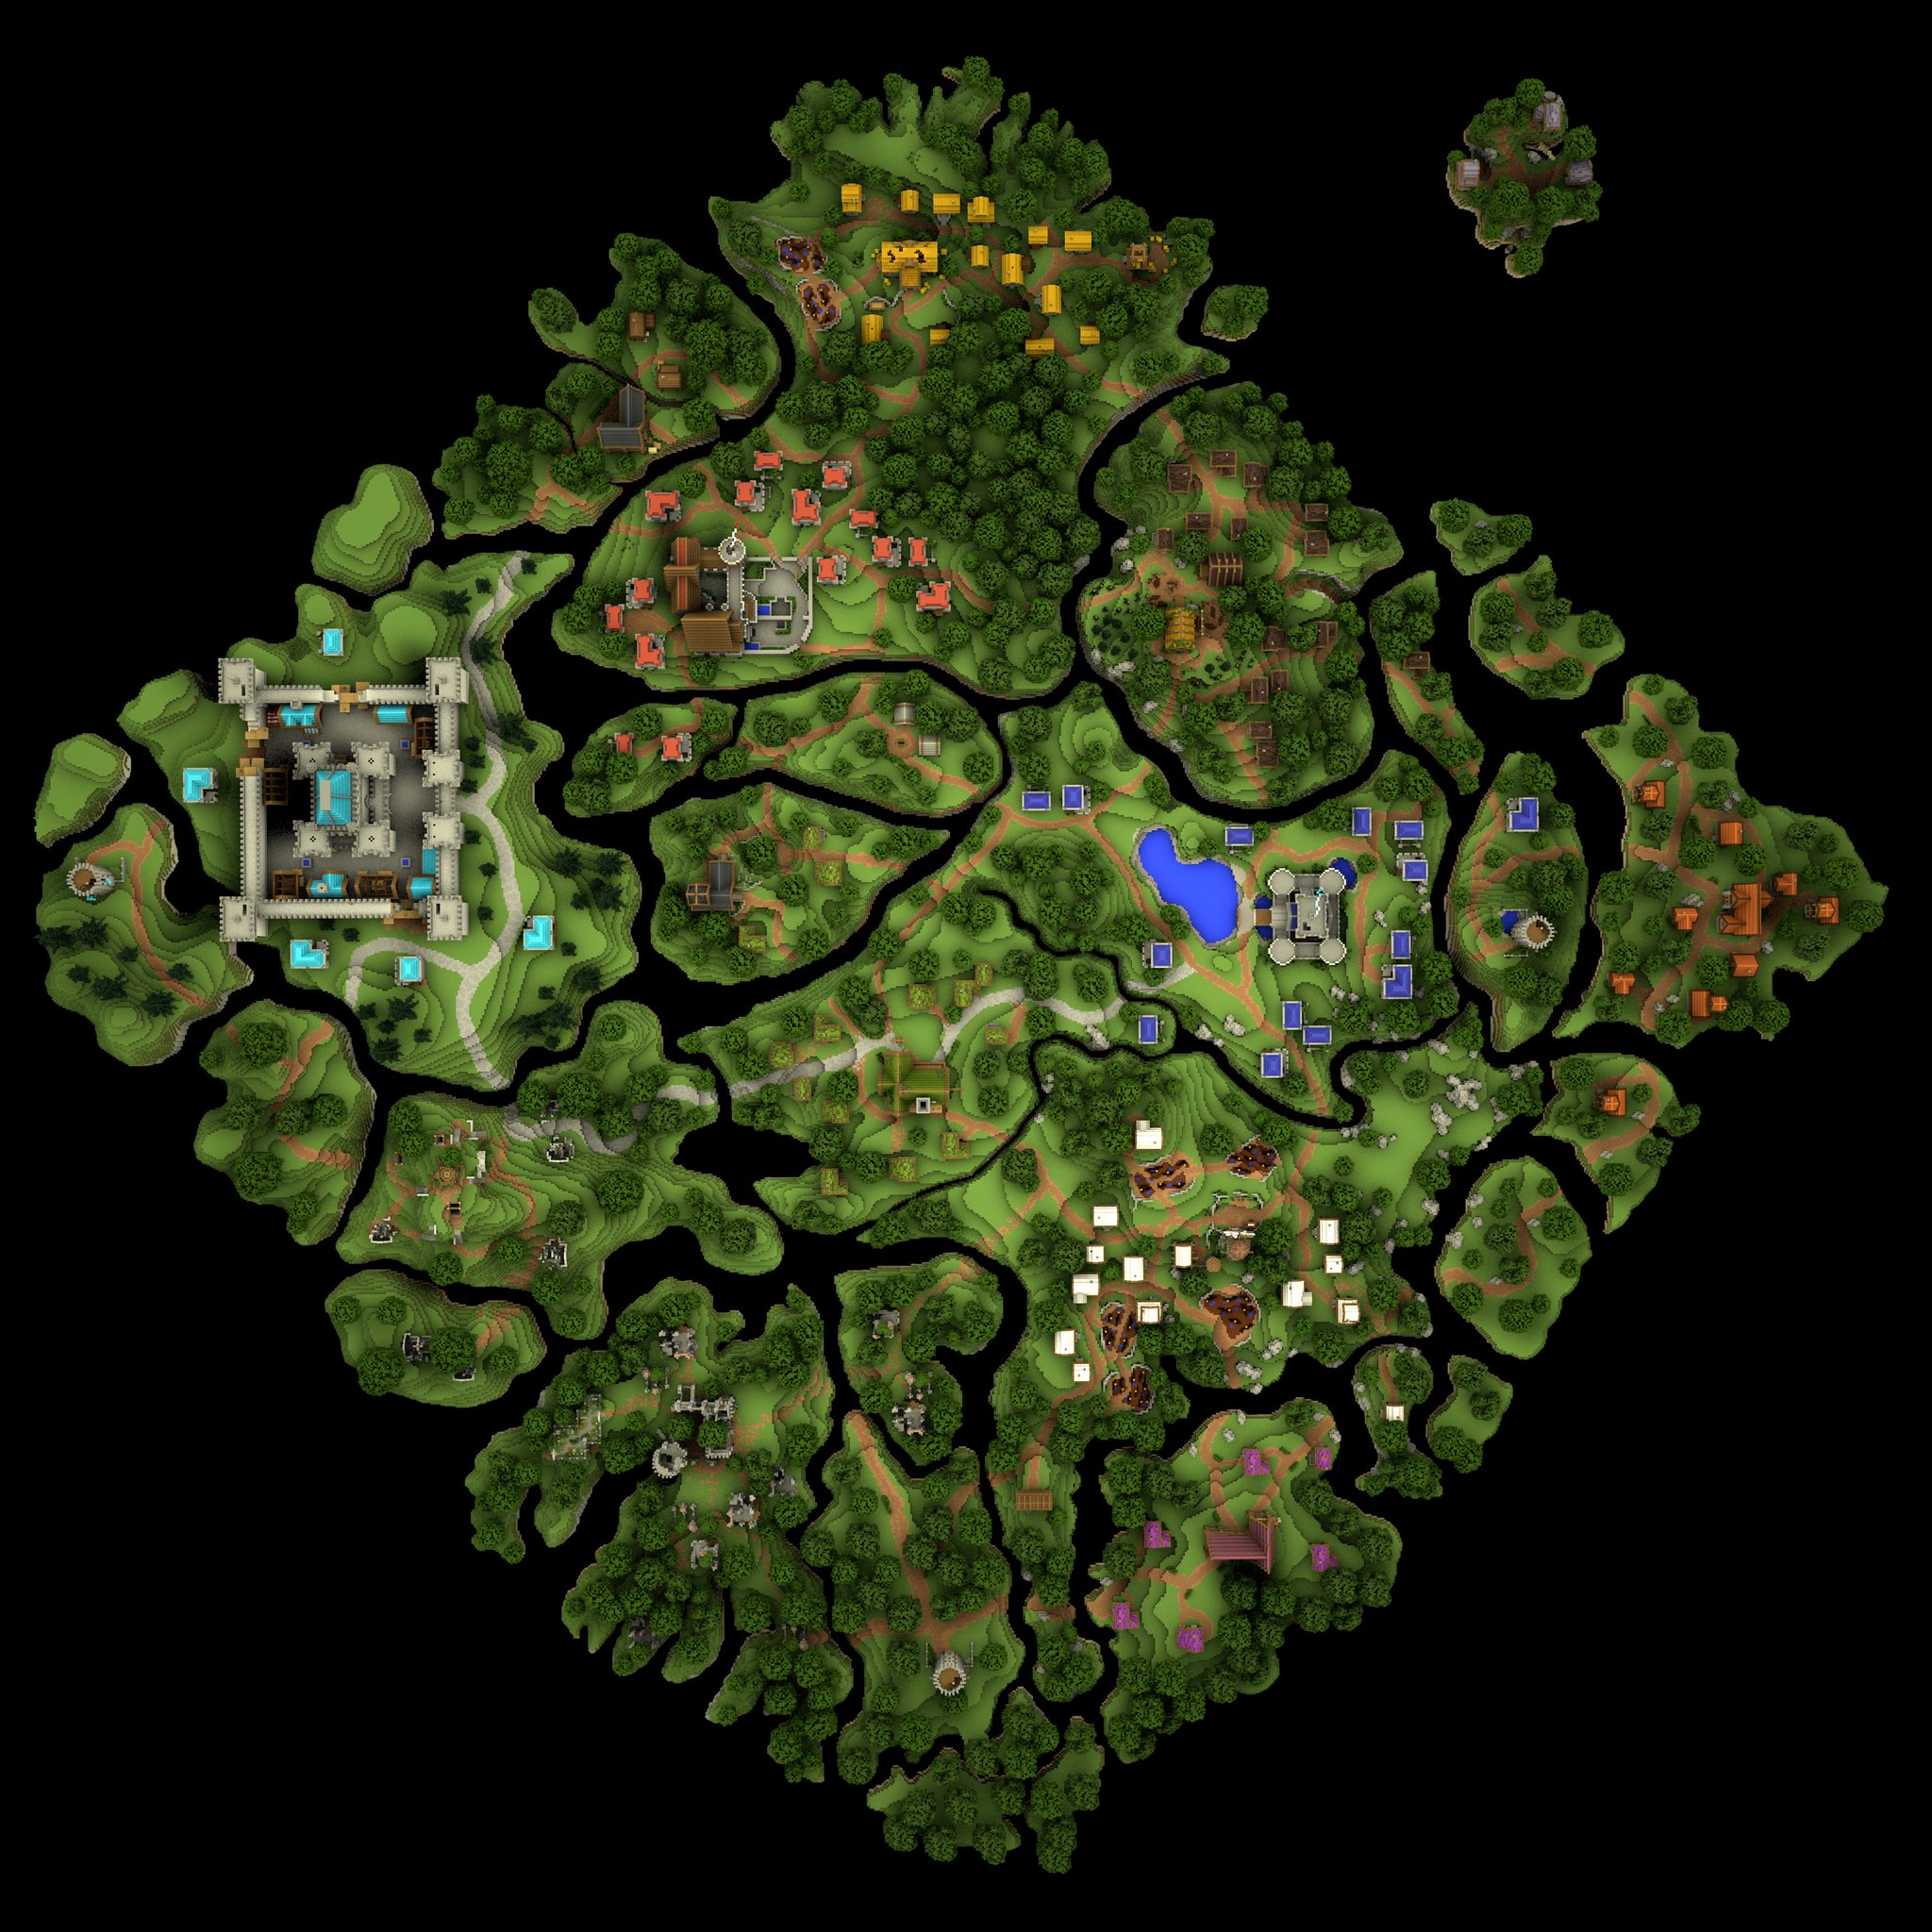 Battle Royale Minecraft Map